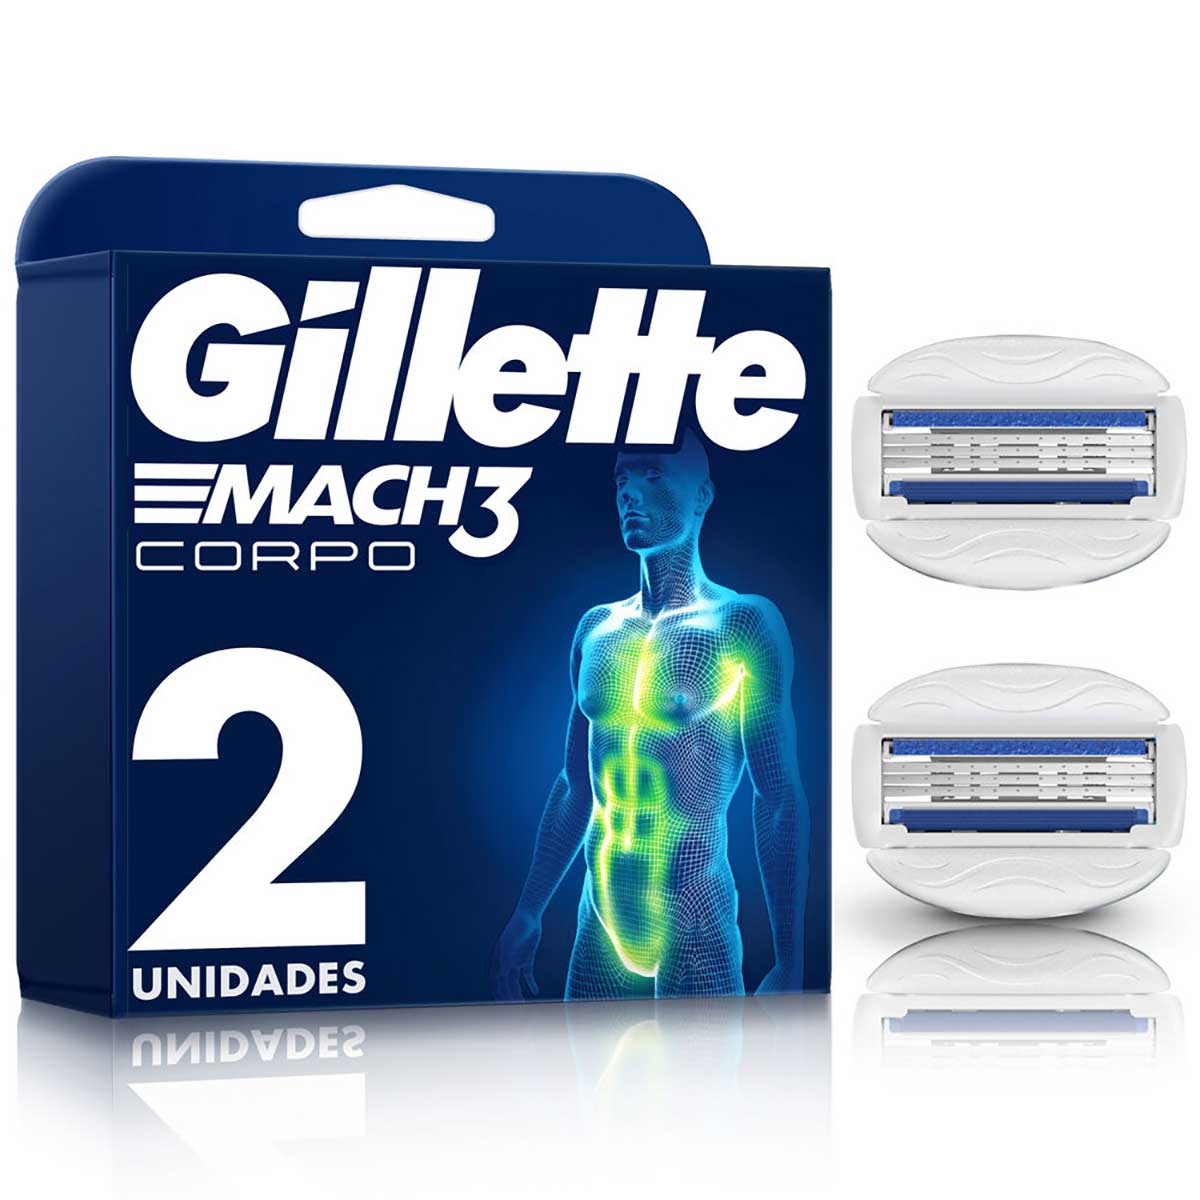 Carga Gillette Fusion Proshield com 2 Cartulhos - Rexona - Lâmina e Carga  para Aparelho de Barbear - Magazine Luiza